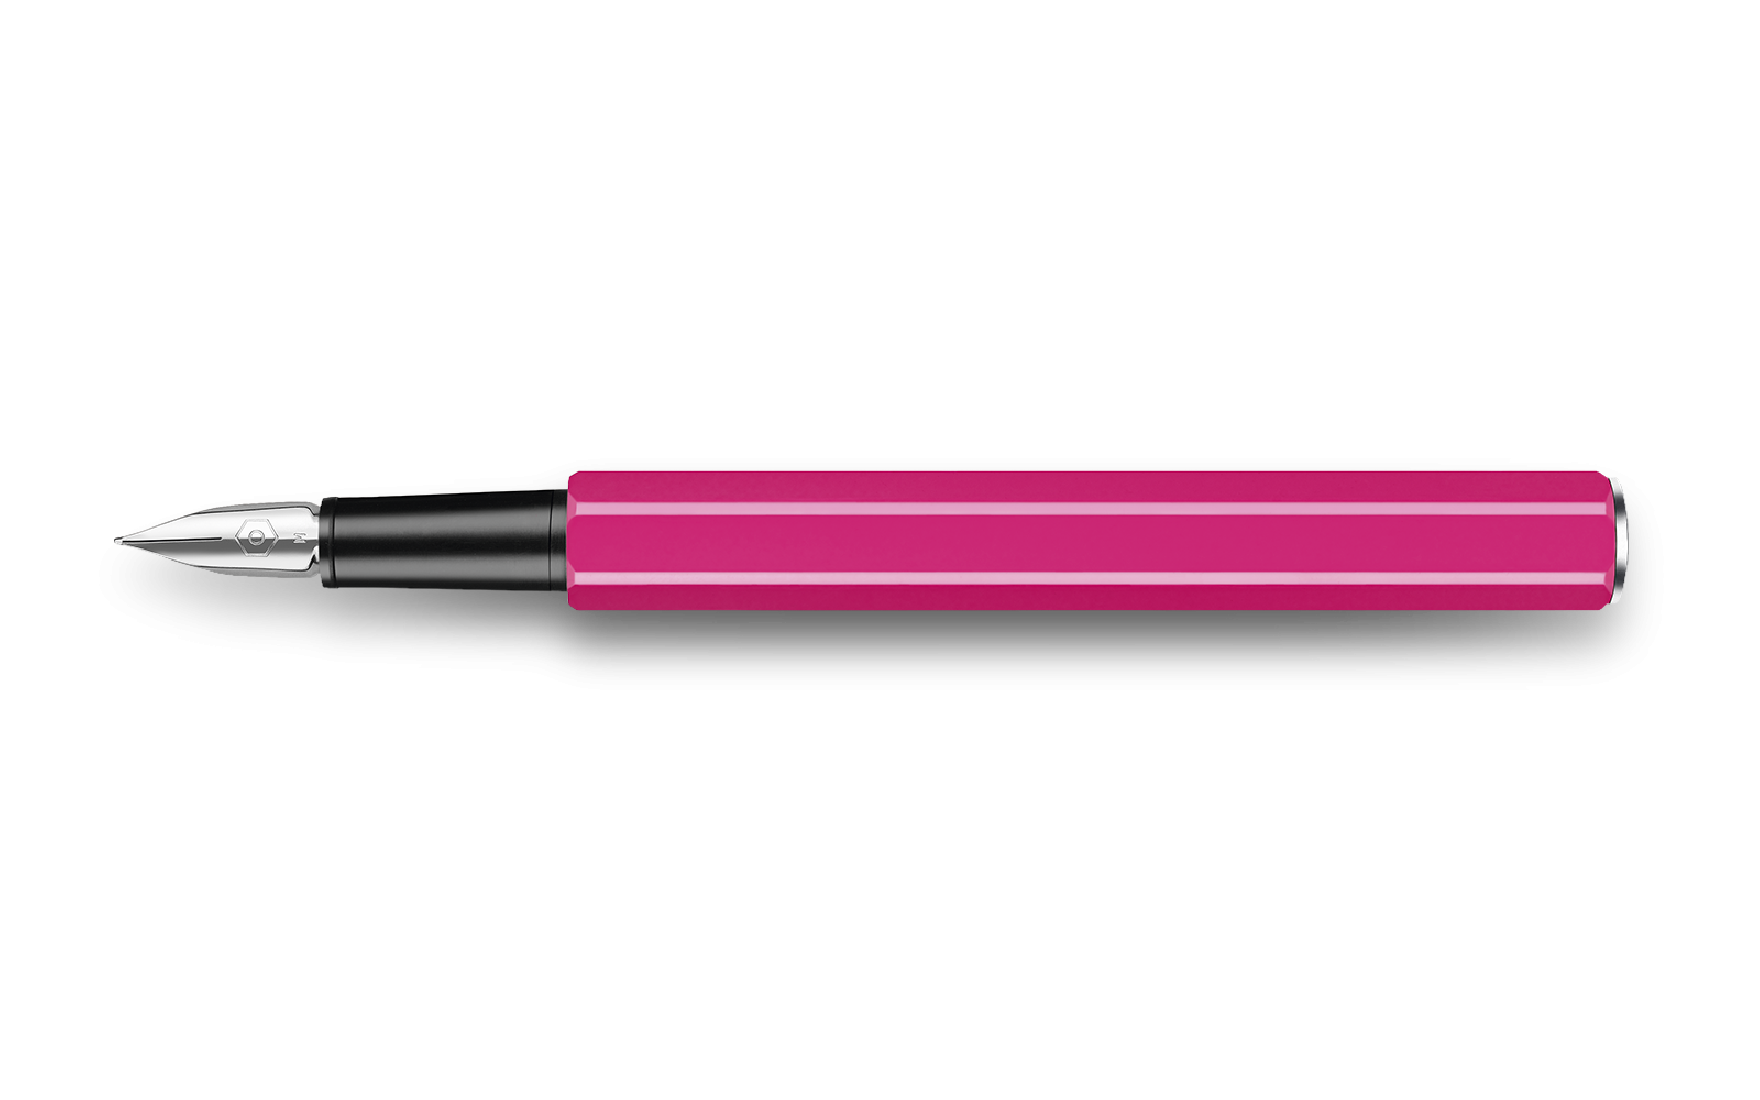 Caran dache 849  fluo pink Fountain pen